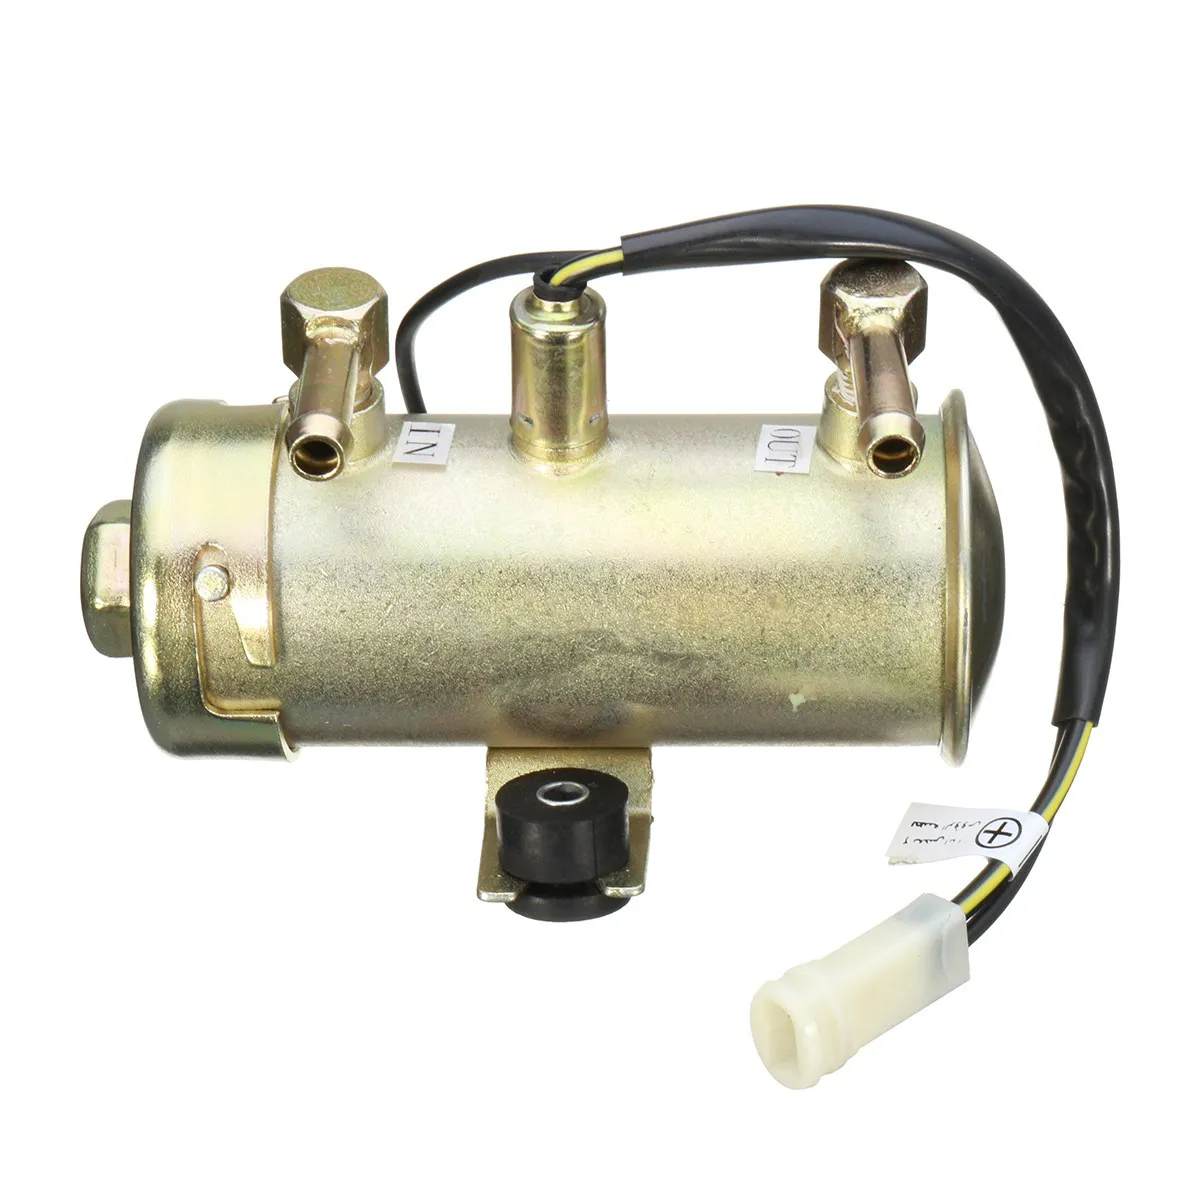 

12V Universal Electric Fuel Petrol Pump Kit Low Pressure HRF-027 For Petrol/Dieselc/Bio